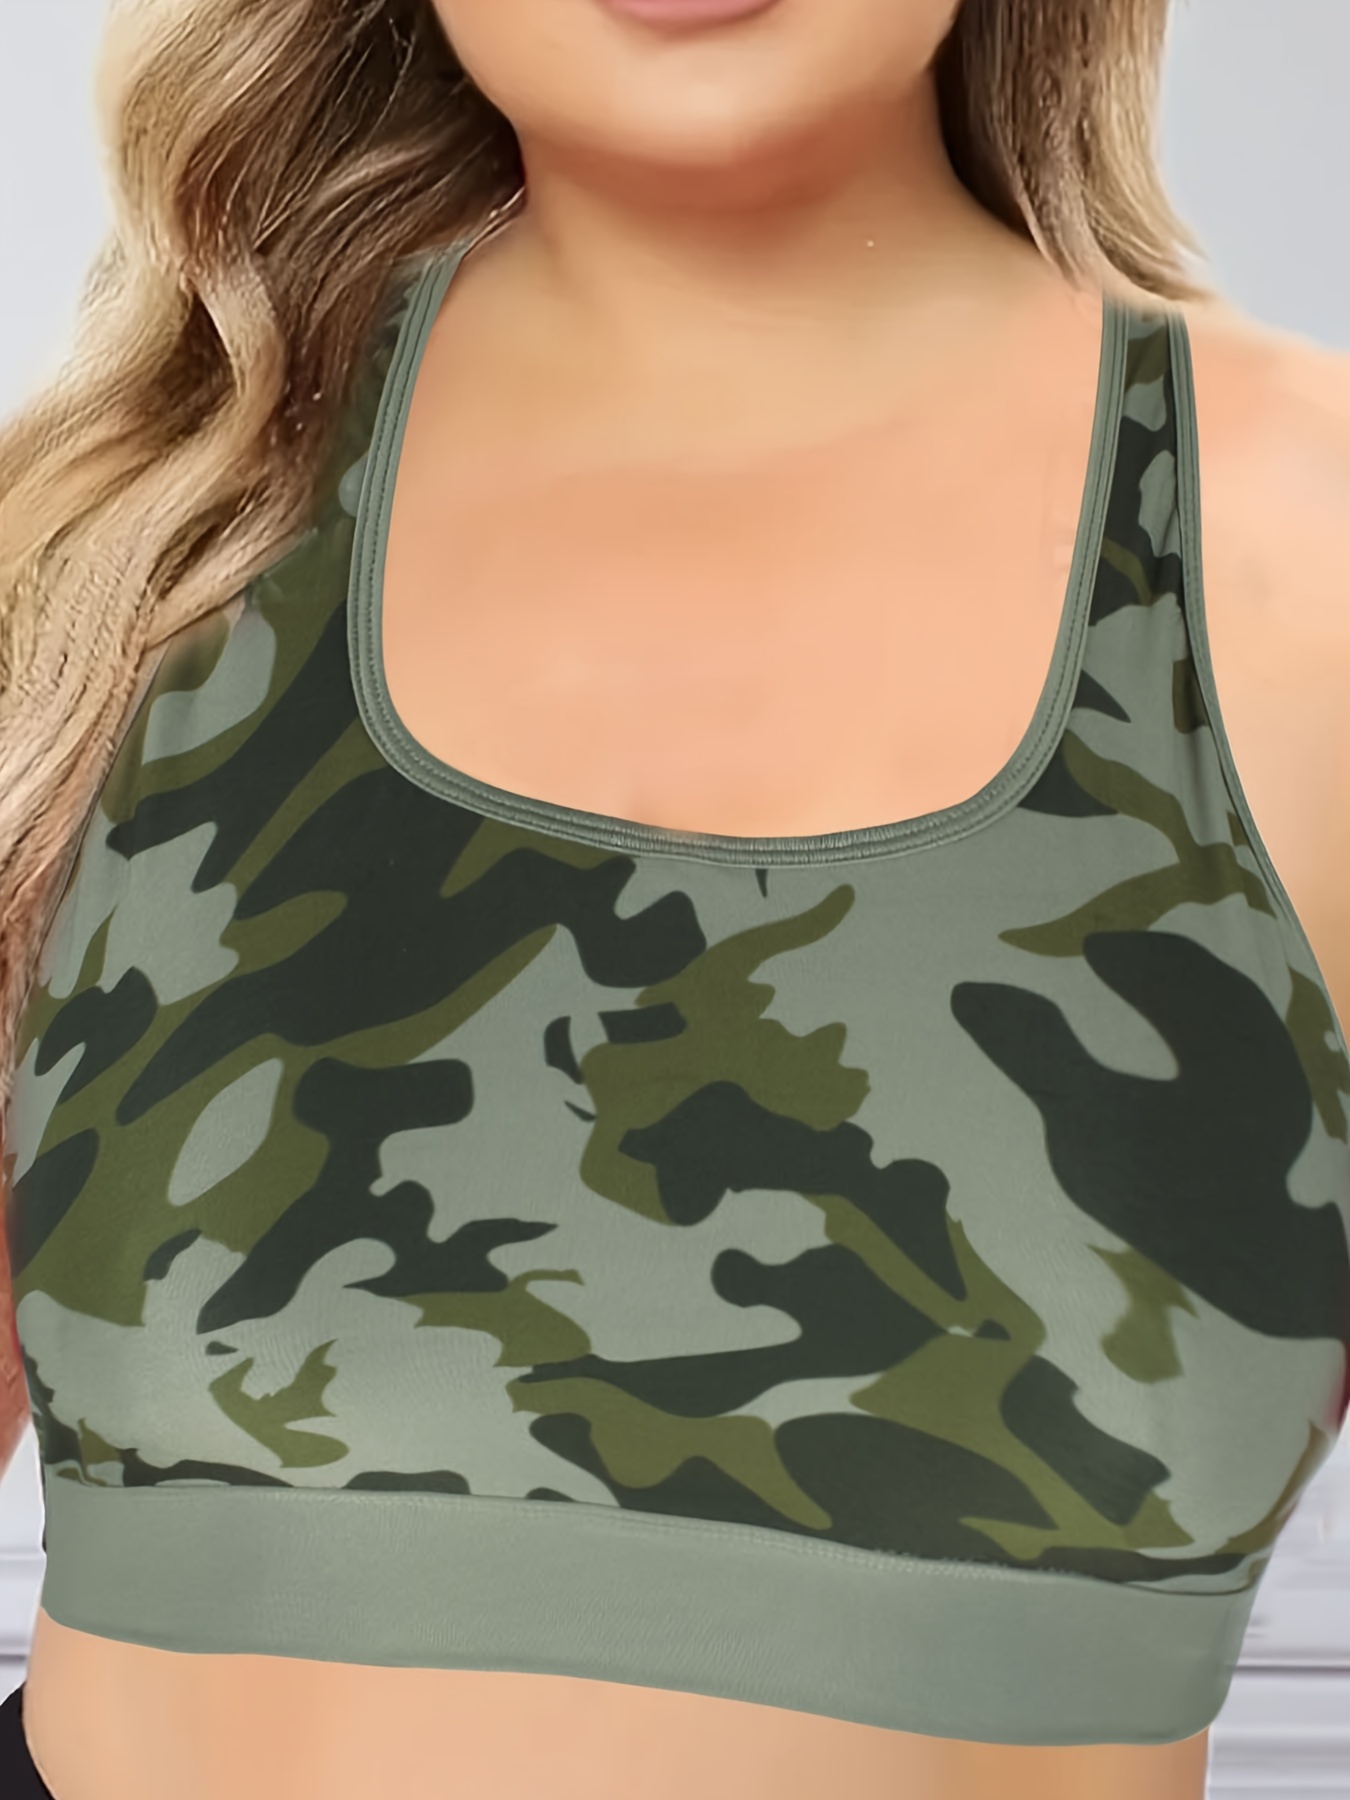 Womens Sexy Camo Military Tank Top Sports Bra Intimates Cami Yoga Workout  Fitness Activewear Sleepwear 